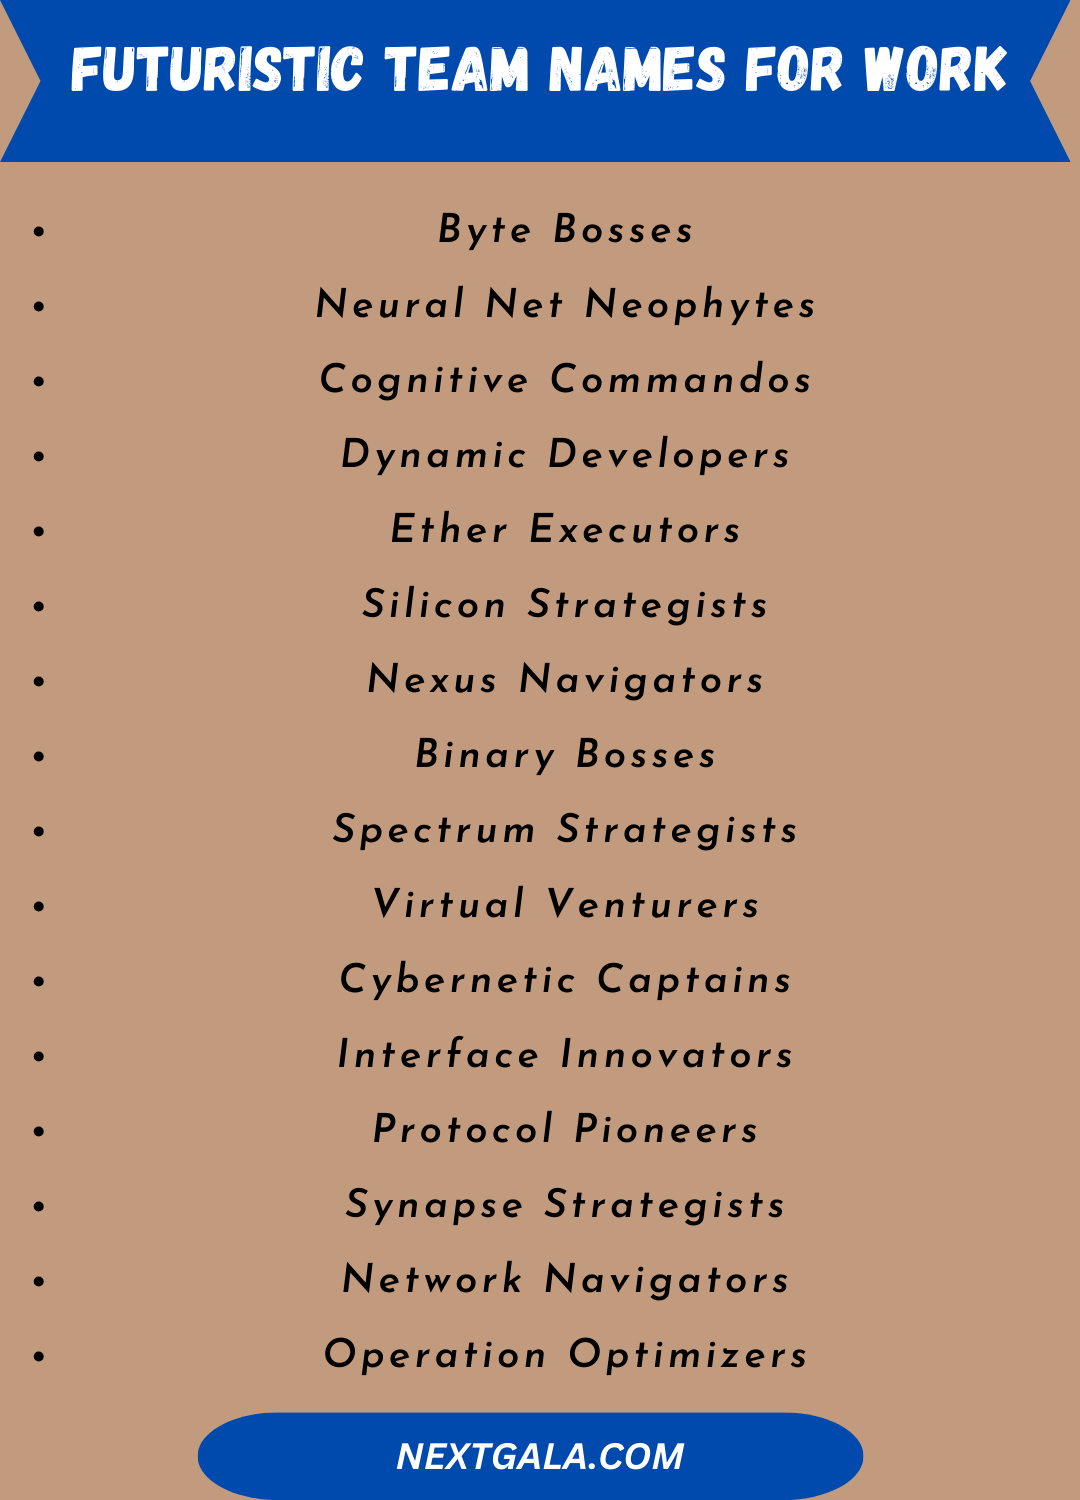 Futuristic Team Names for Work